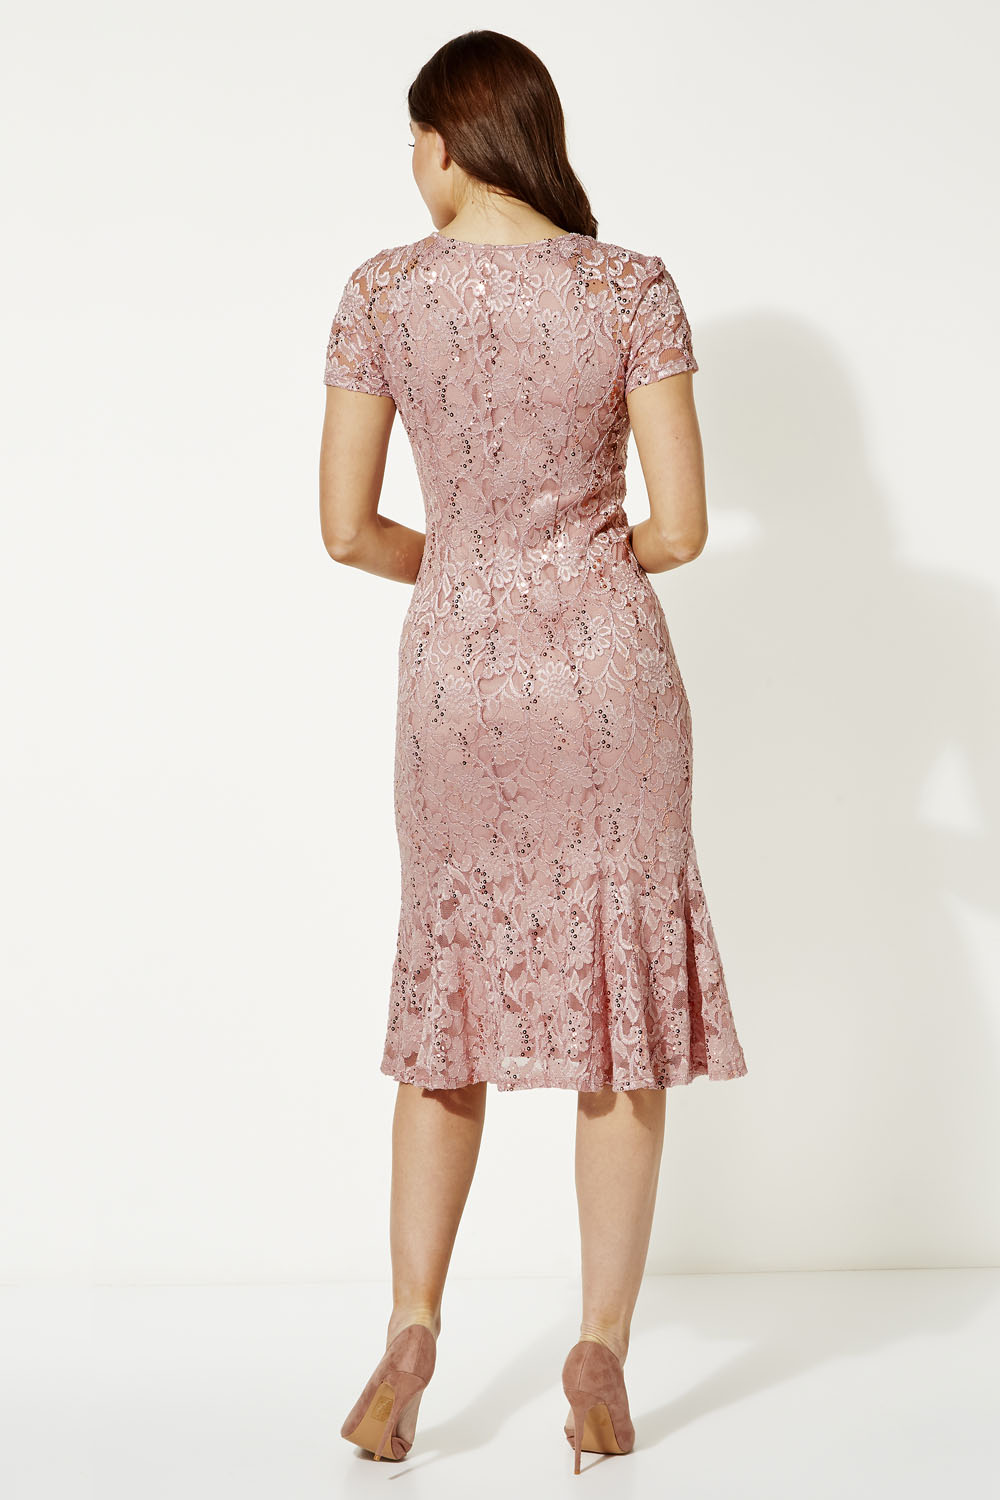 Light Pink Metallic Lace Sequin Midi Dress, Image 2 of 4